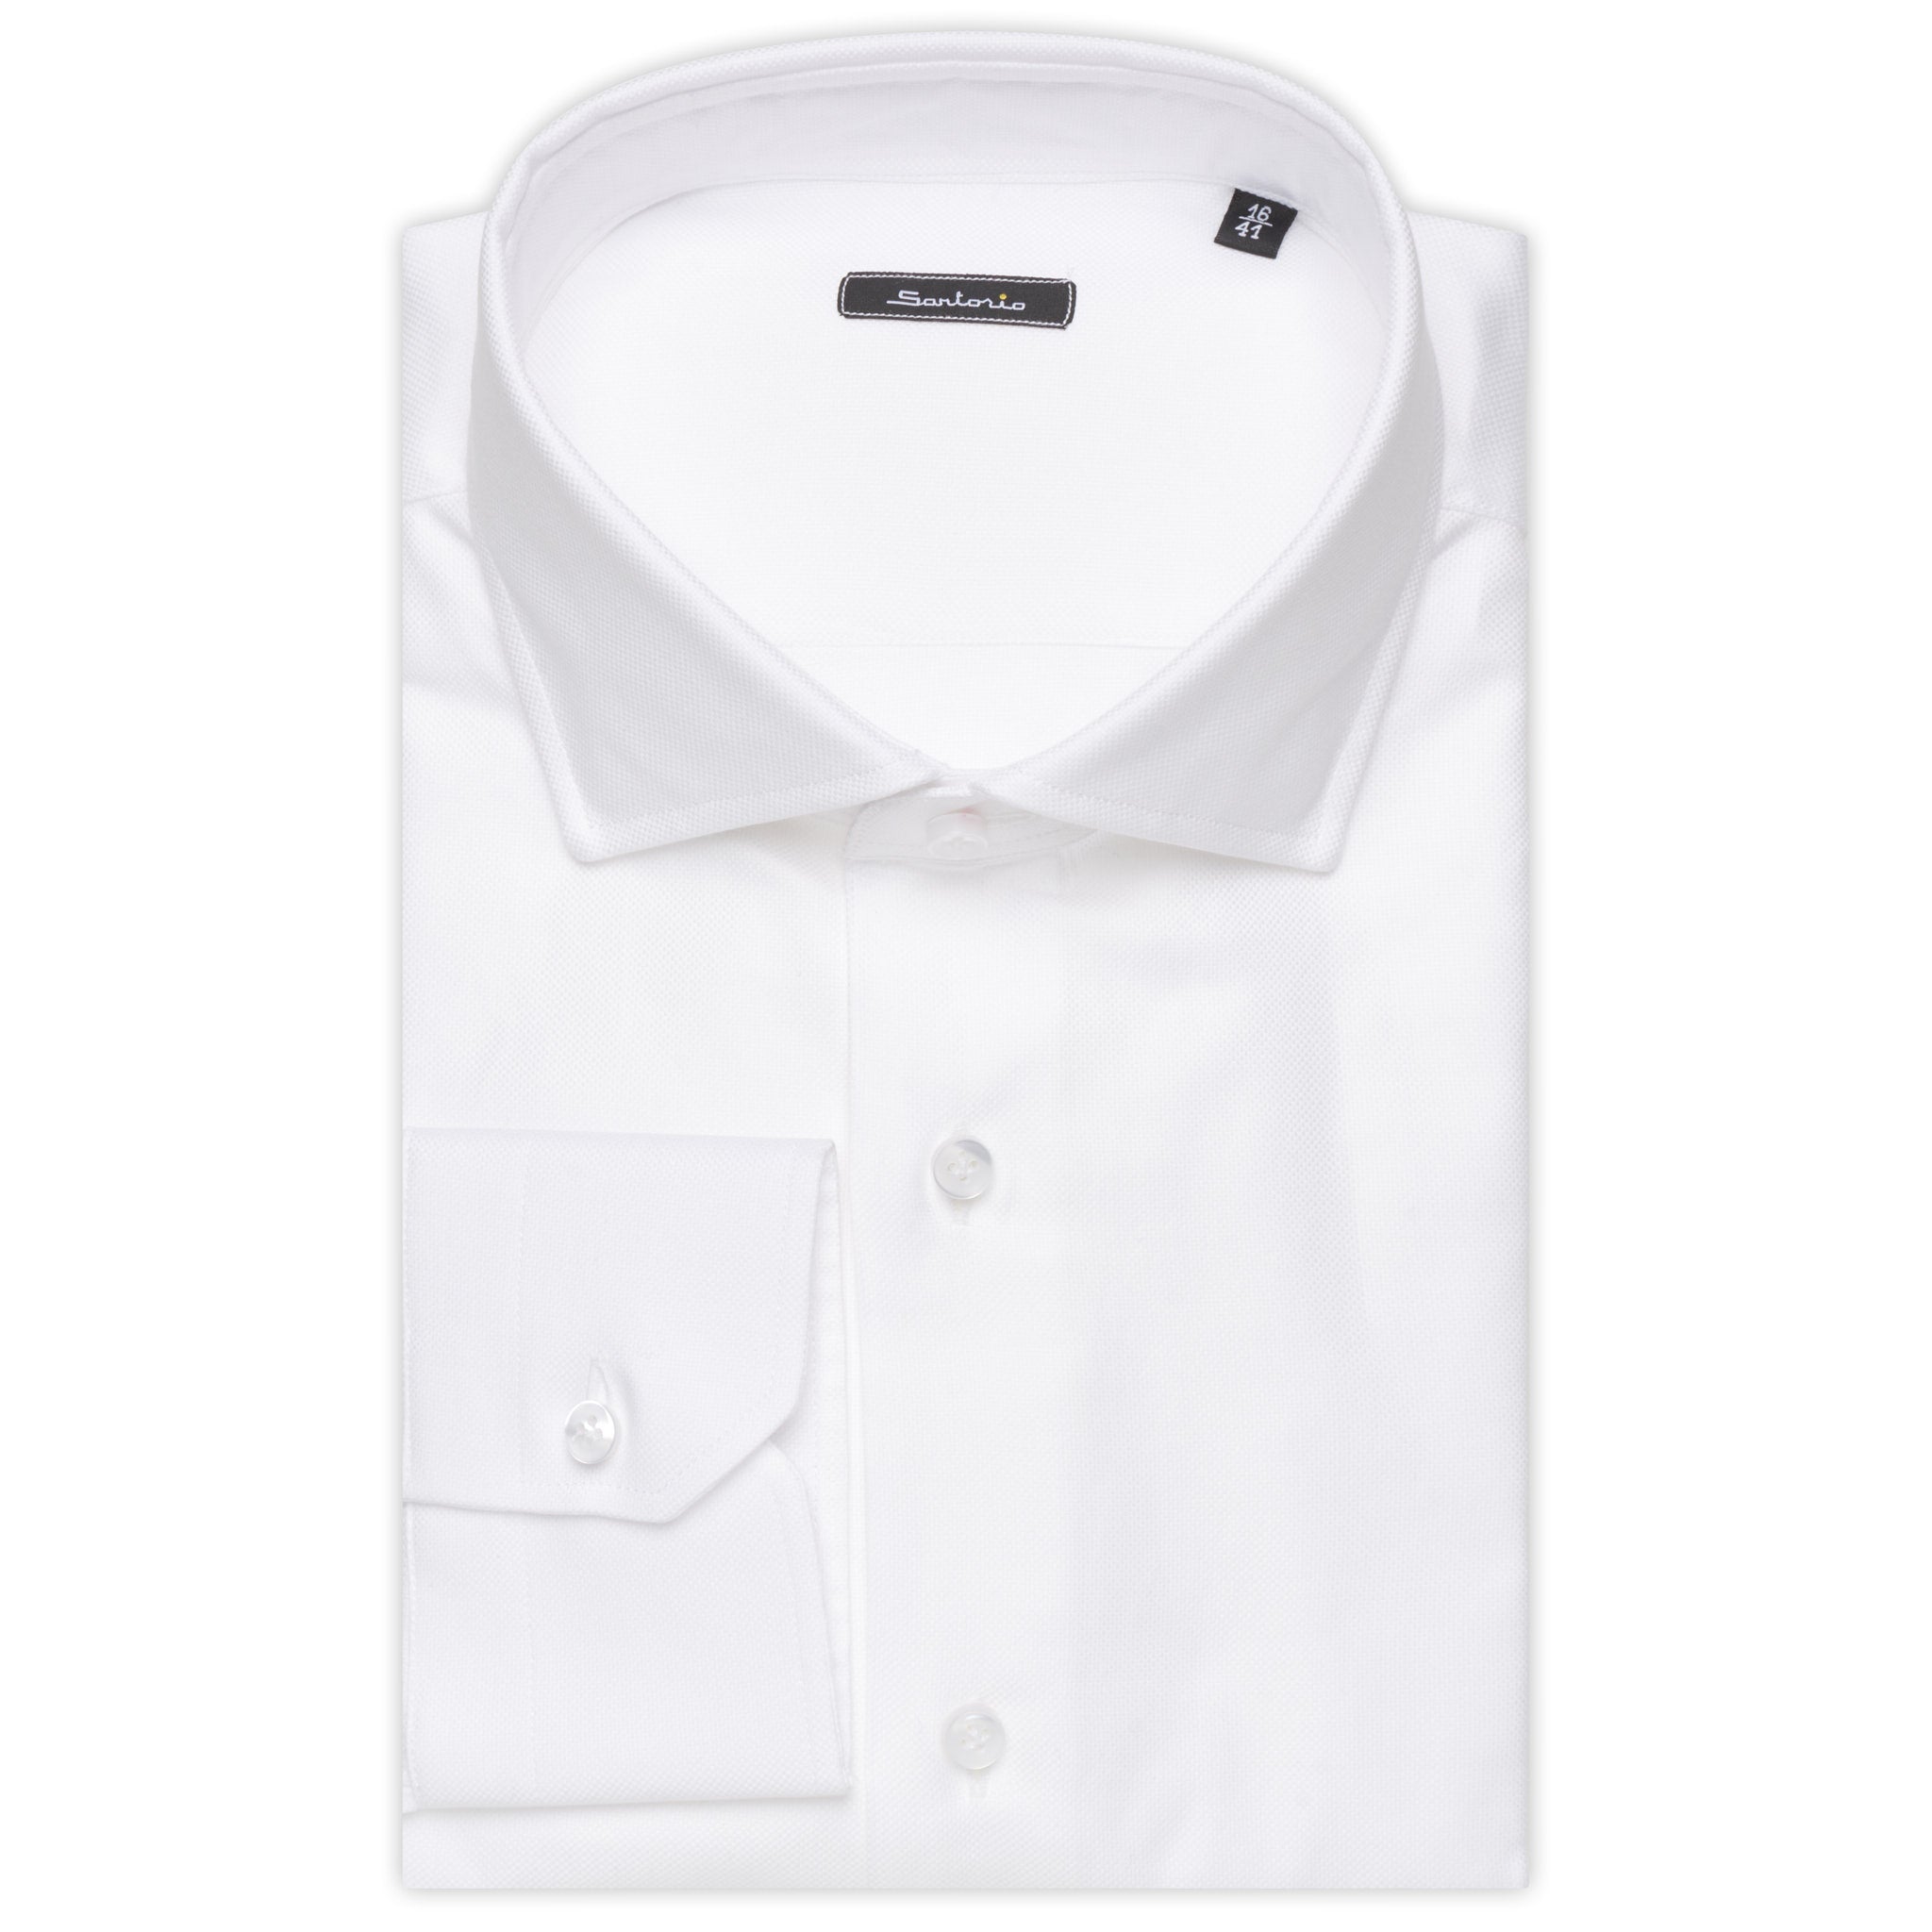 SARTORIO by KITON White Royal Oxford Cotton Dress Shirt NEW Slim Fit SARTORIO